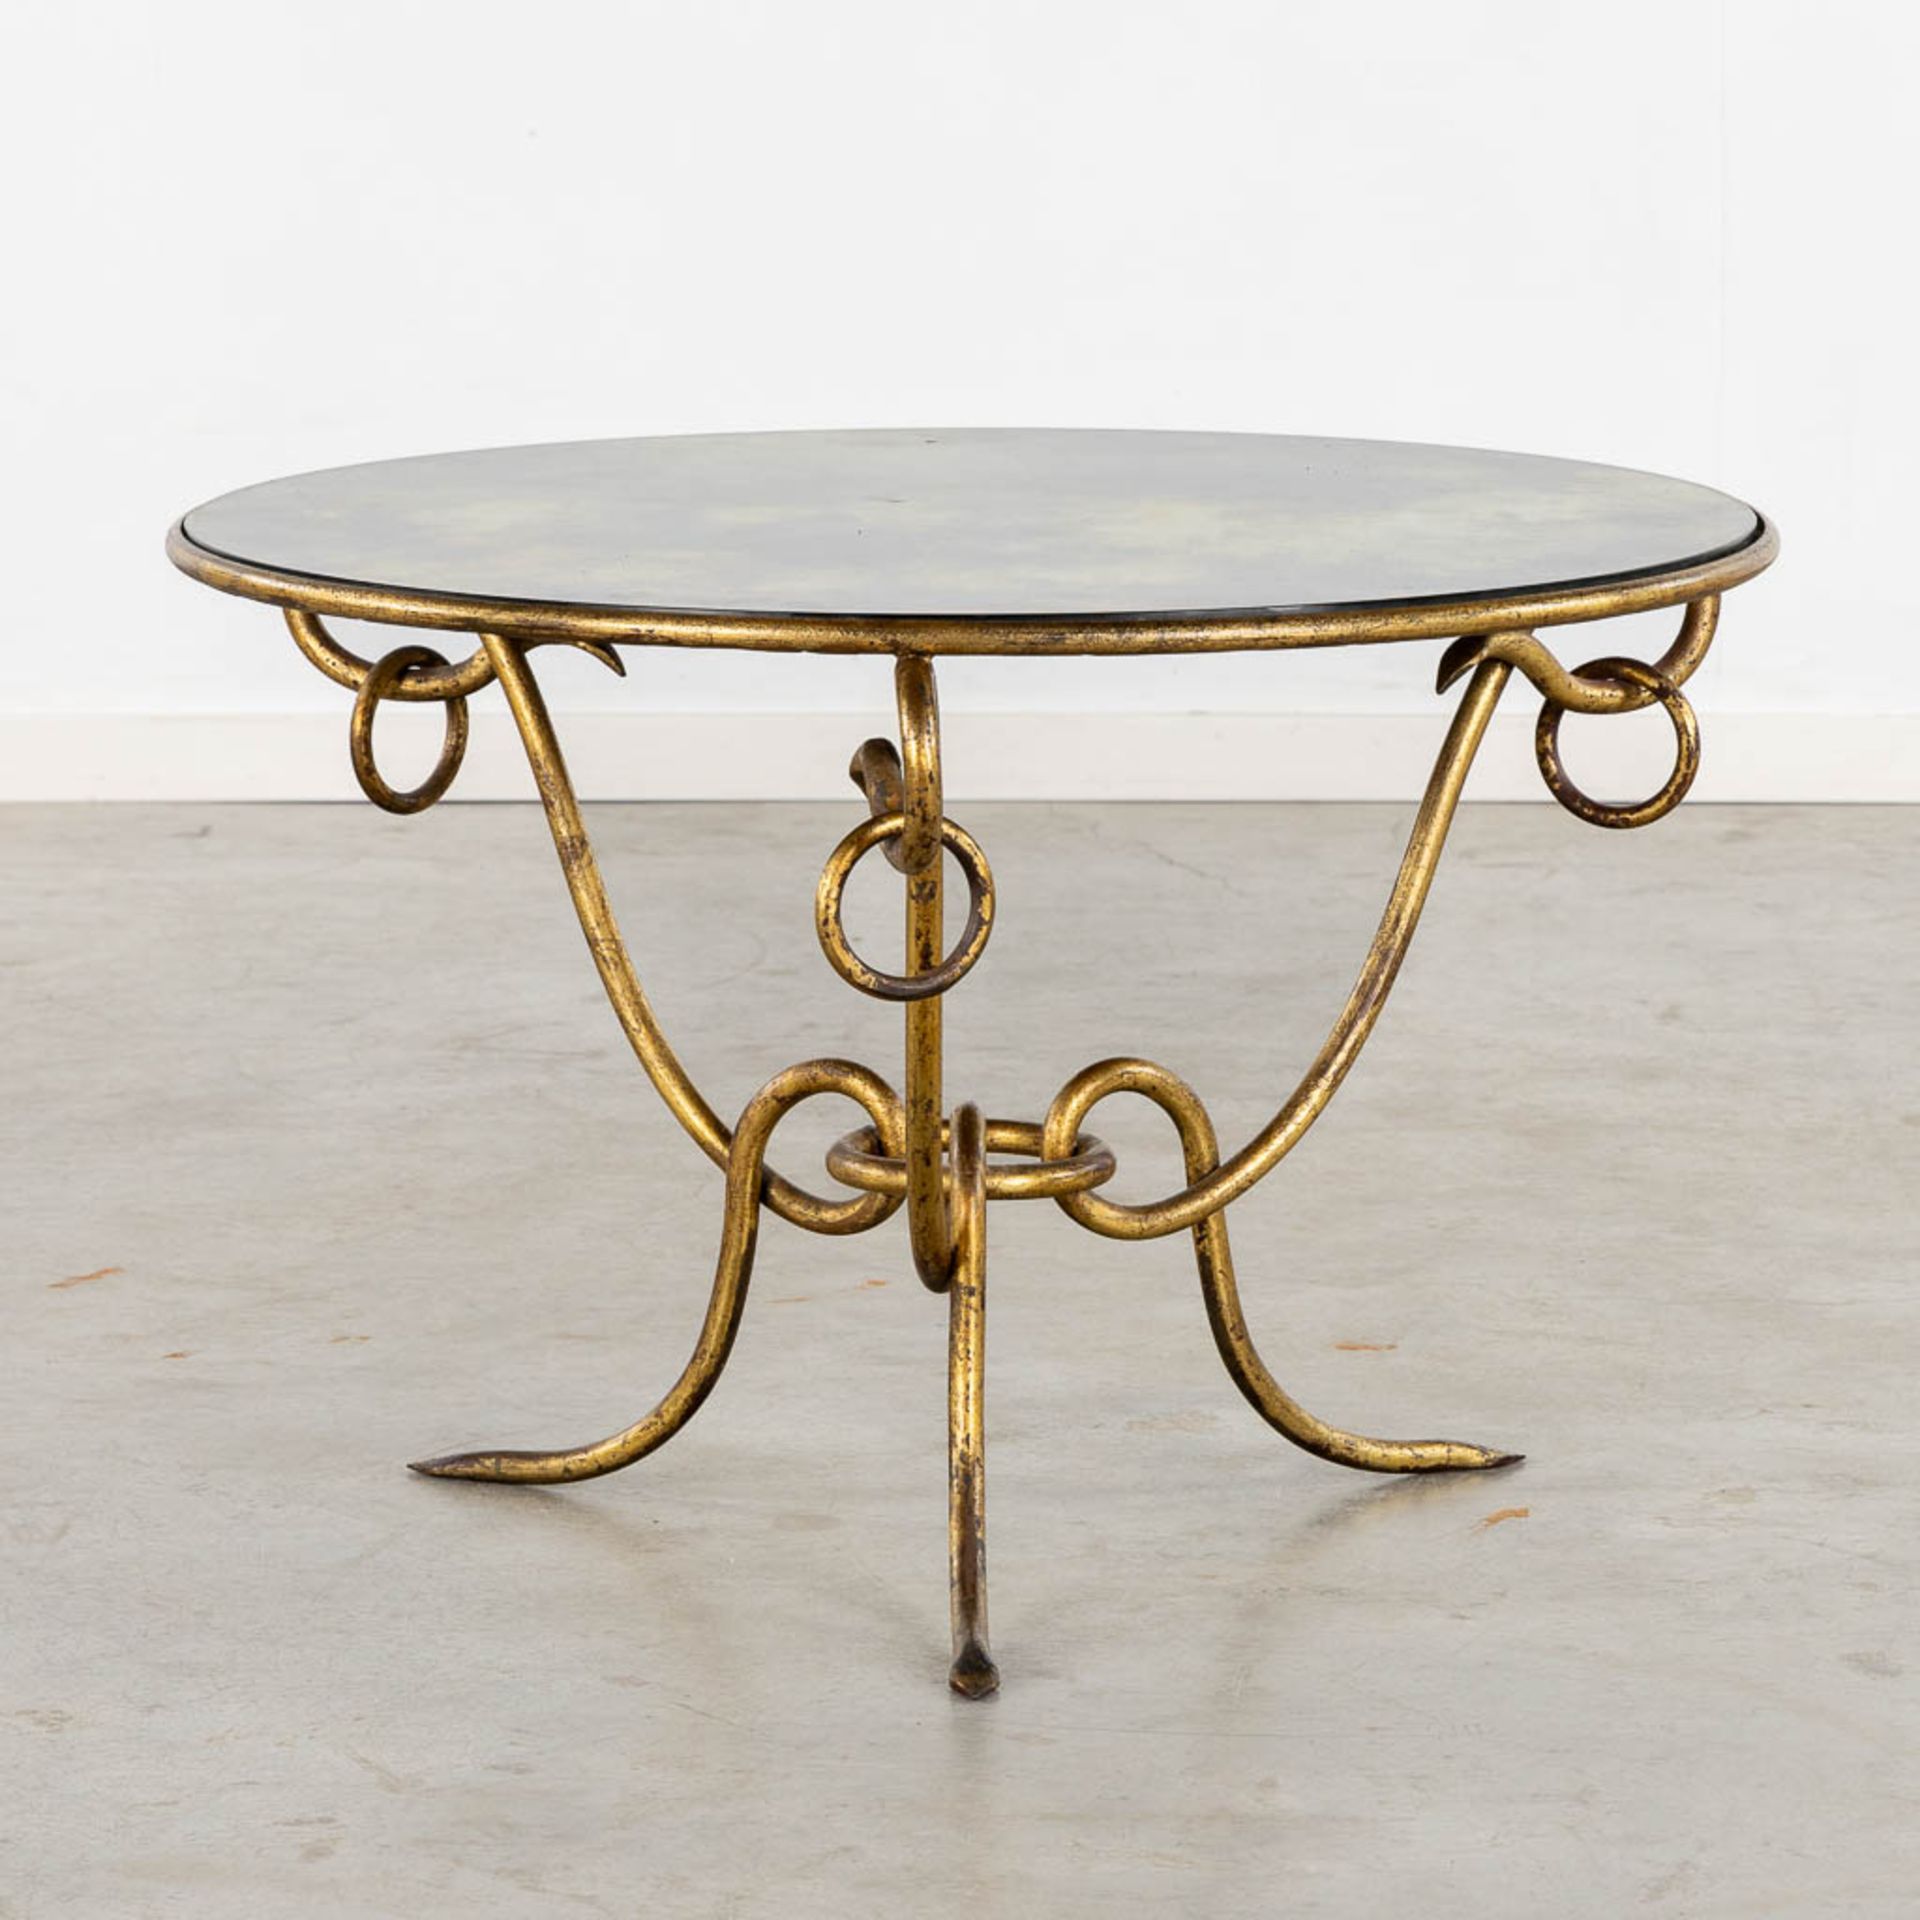 René DROUET (1899-1993) 'Round cofee table' (H:54 x D:87 cm) - Bild 4 aus 10